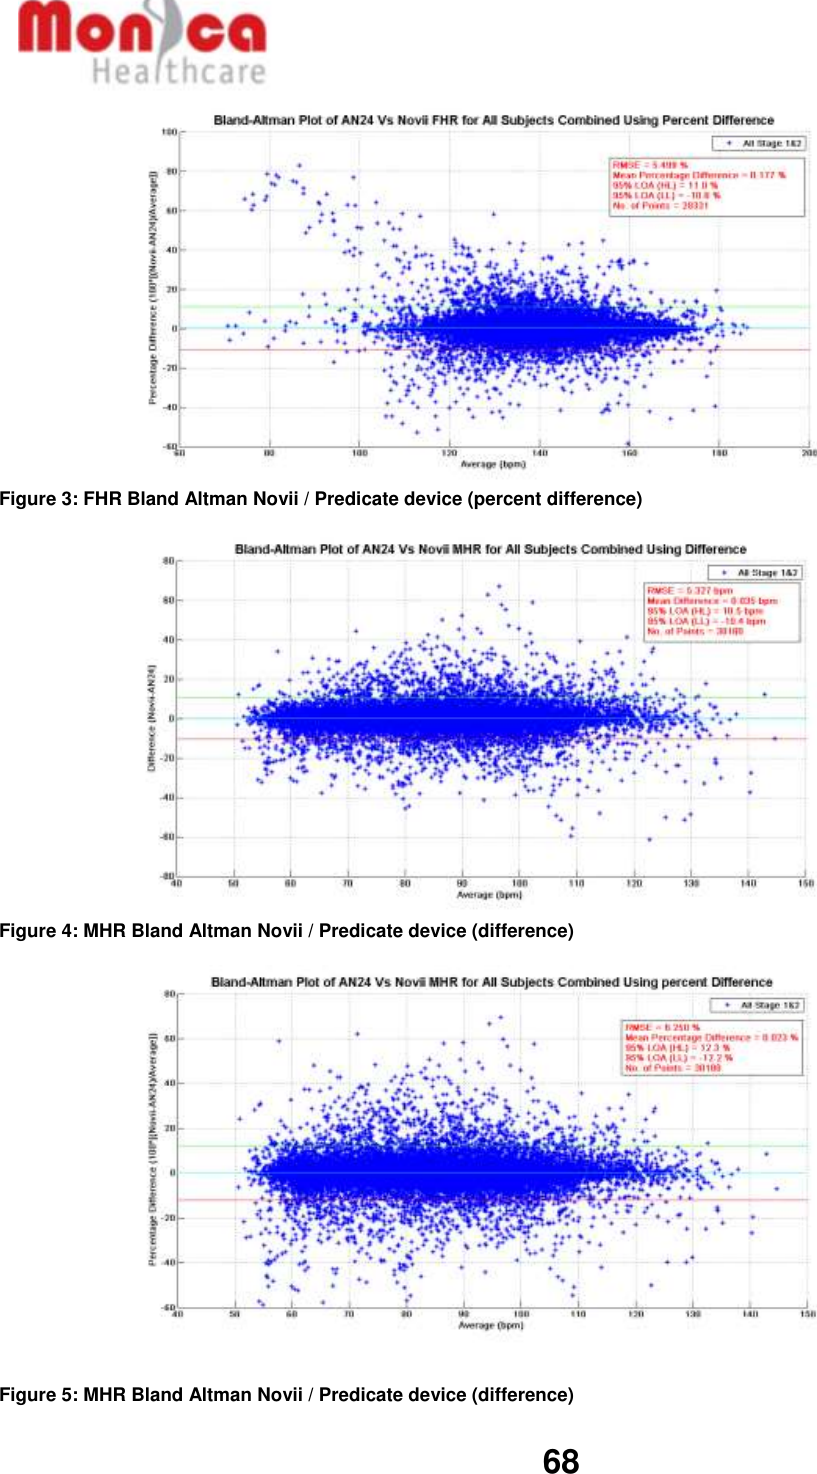   68   Figure 3: FHR Bland Altman Novii / Predicate device (percent difference)        Figure 4: MHR Bland Altman Novii / Predicate device (difference)          Figure 5: MHR Bland Altman Novii / Predicate device (difference) 